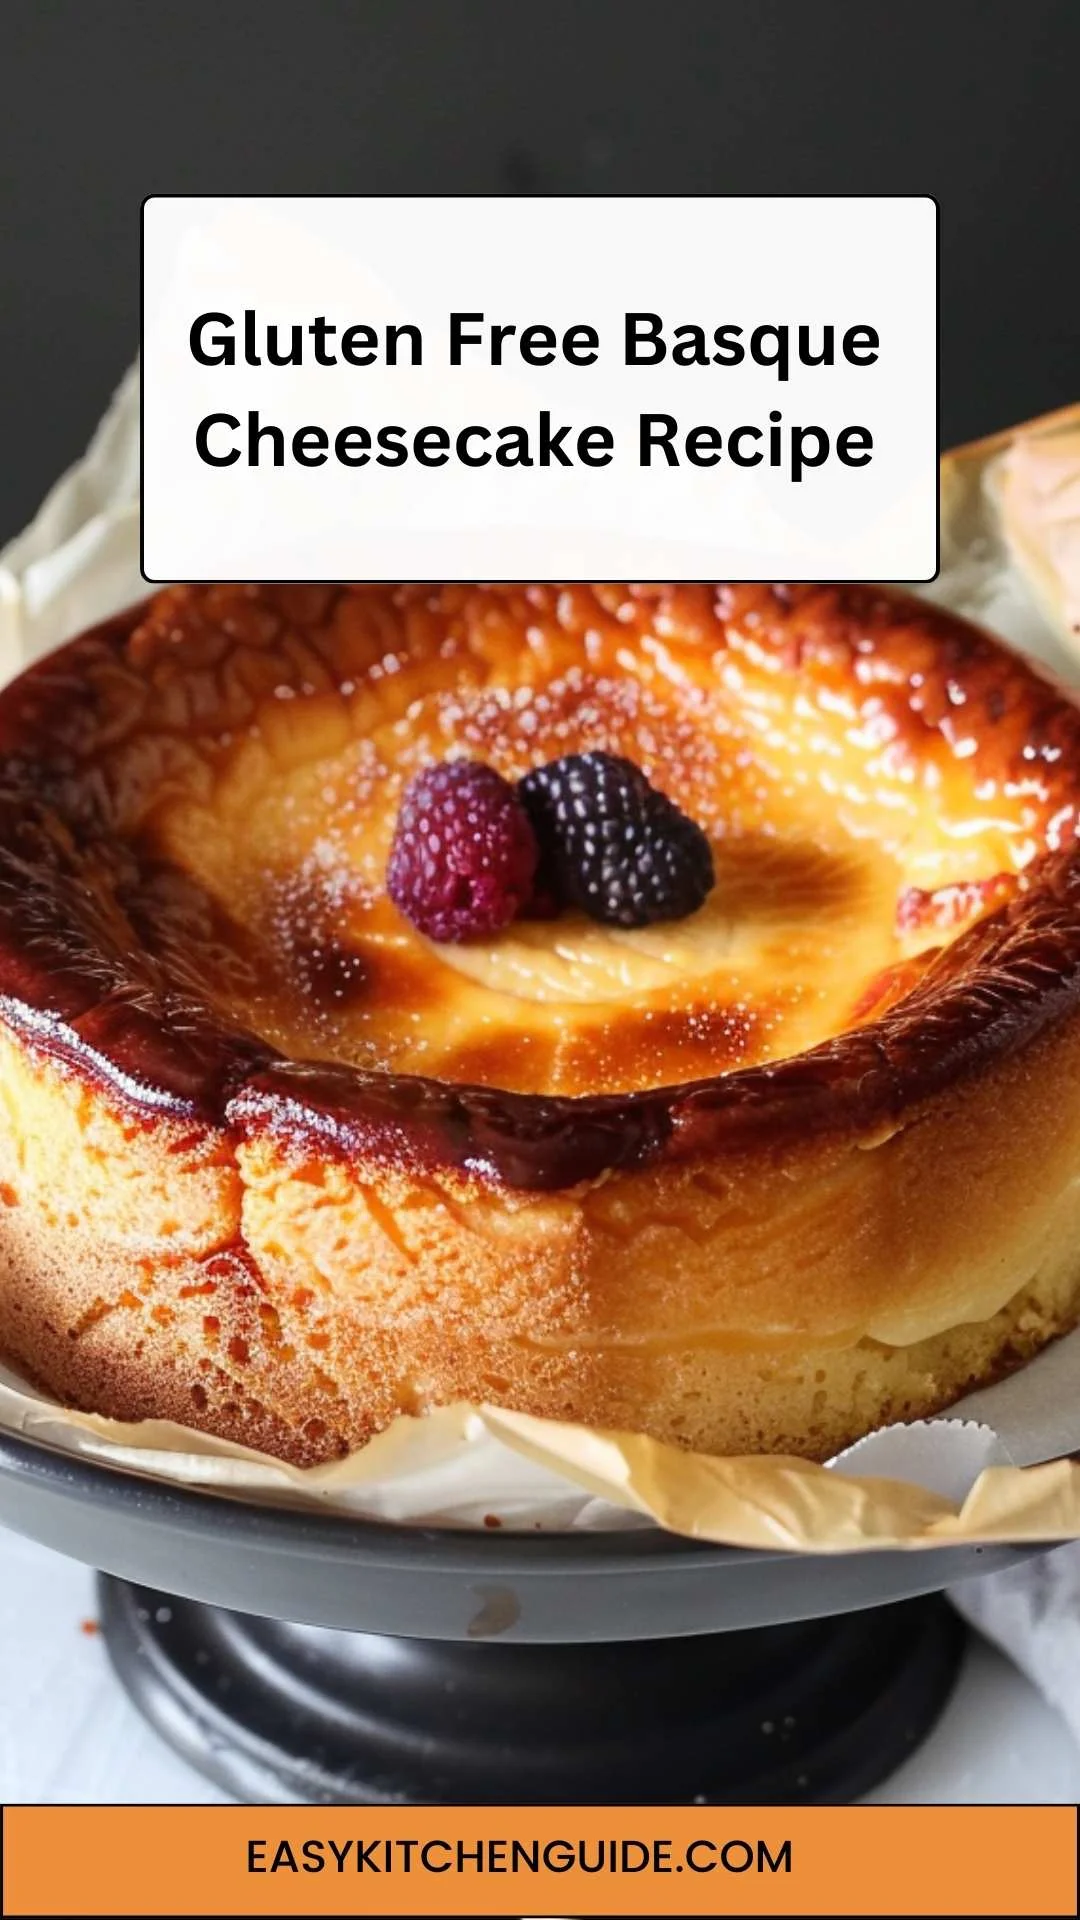 Gluten Free Basque Cheesecake Recipe